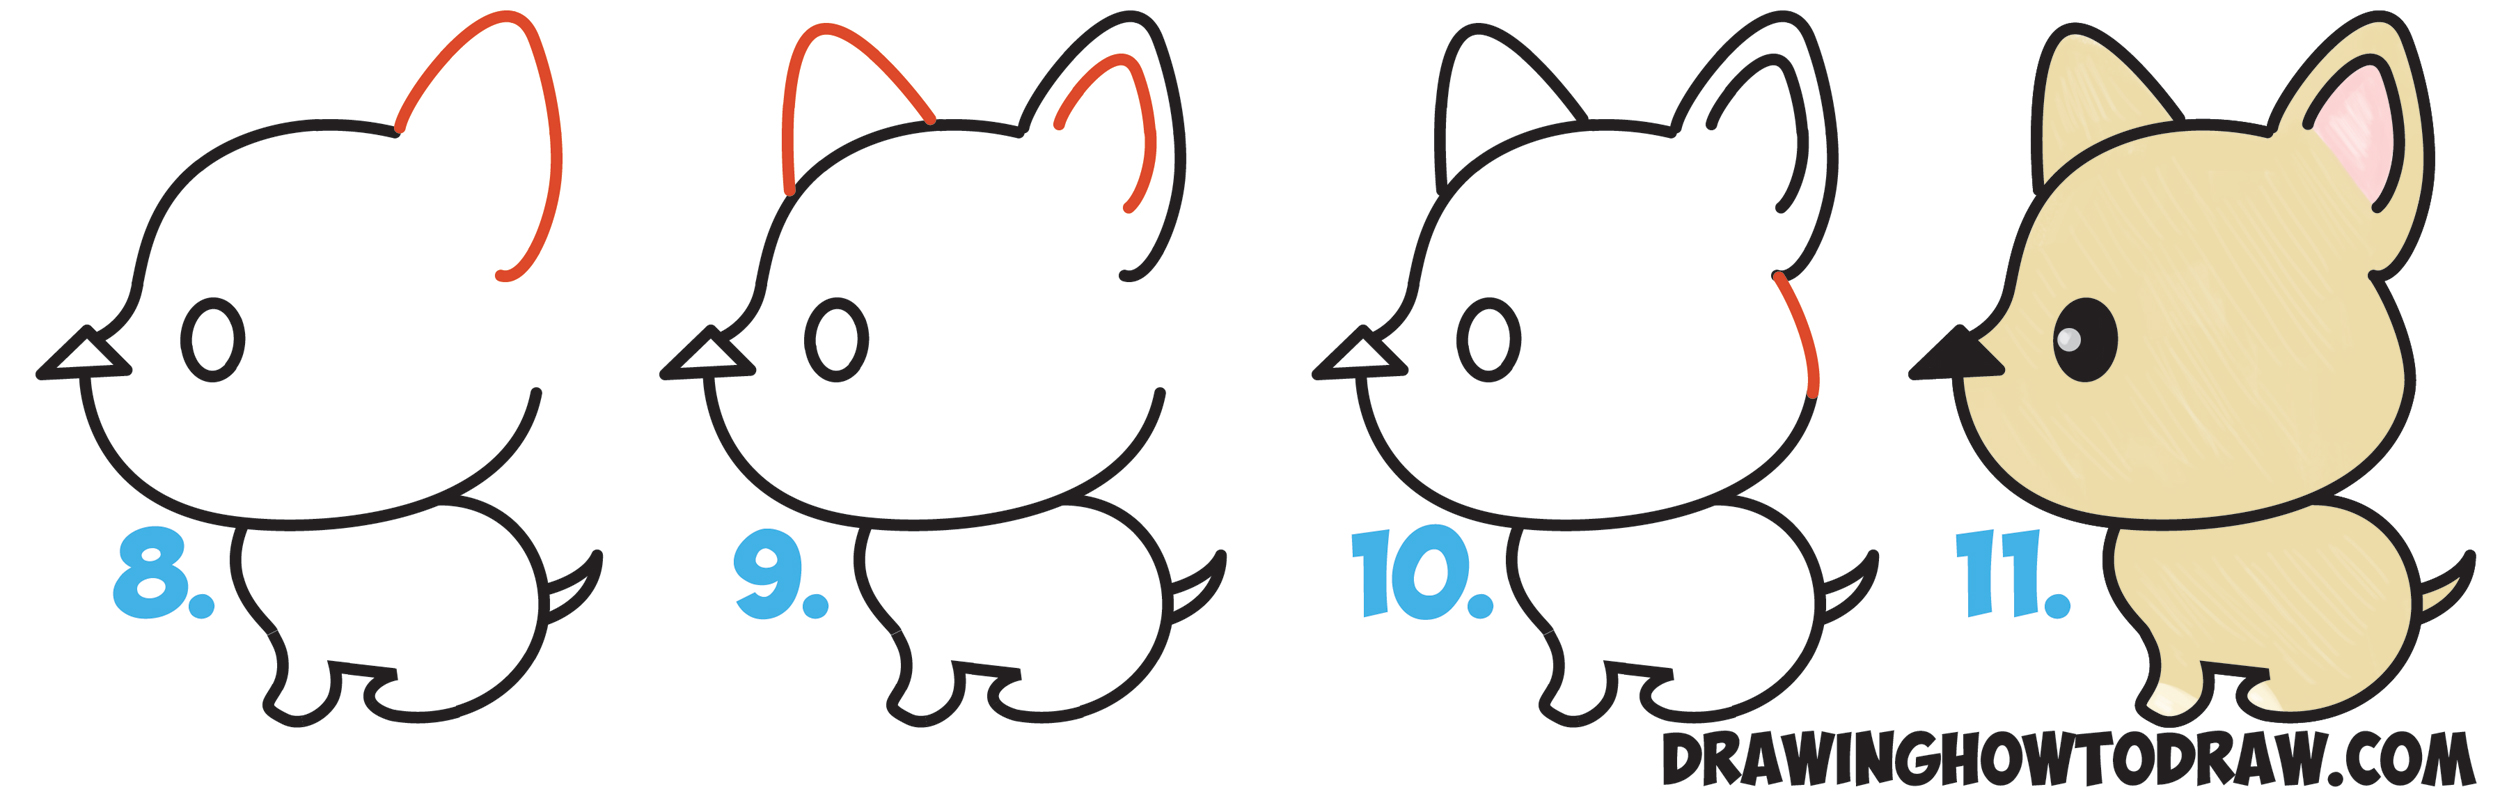 How to Draw a Cute Cartoon Dog (Kawaii Style) from an 